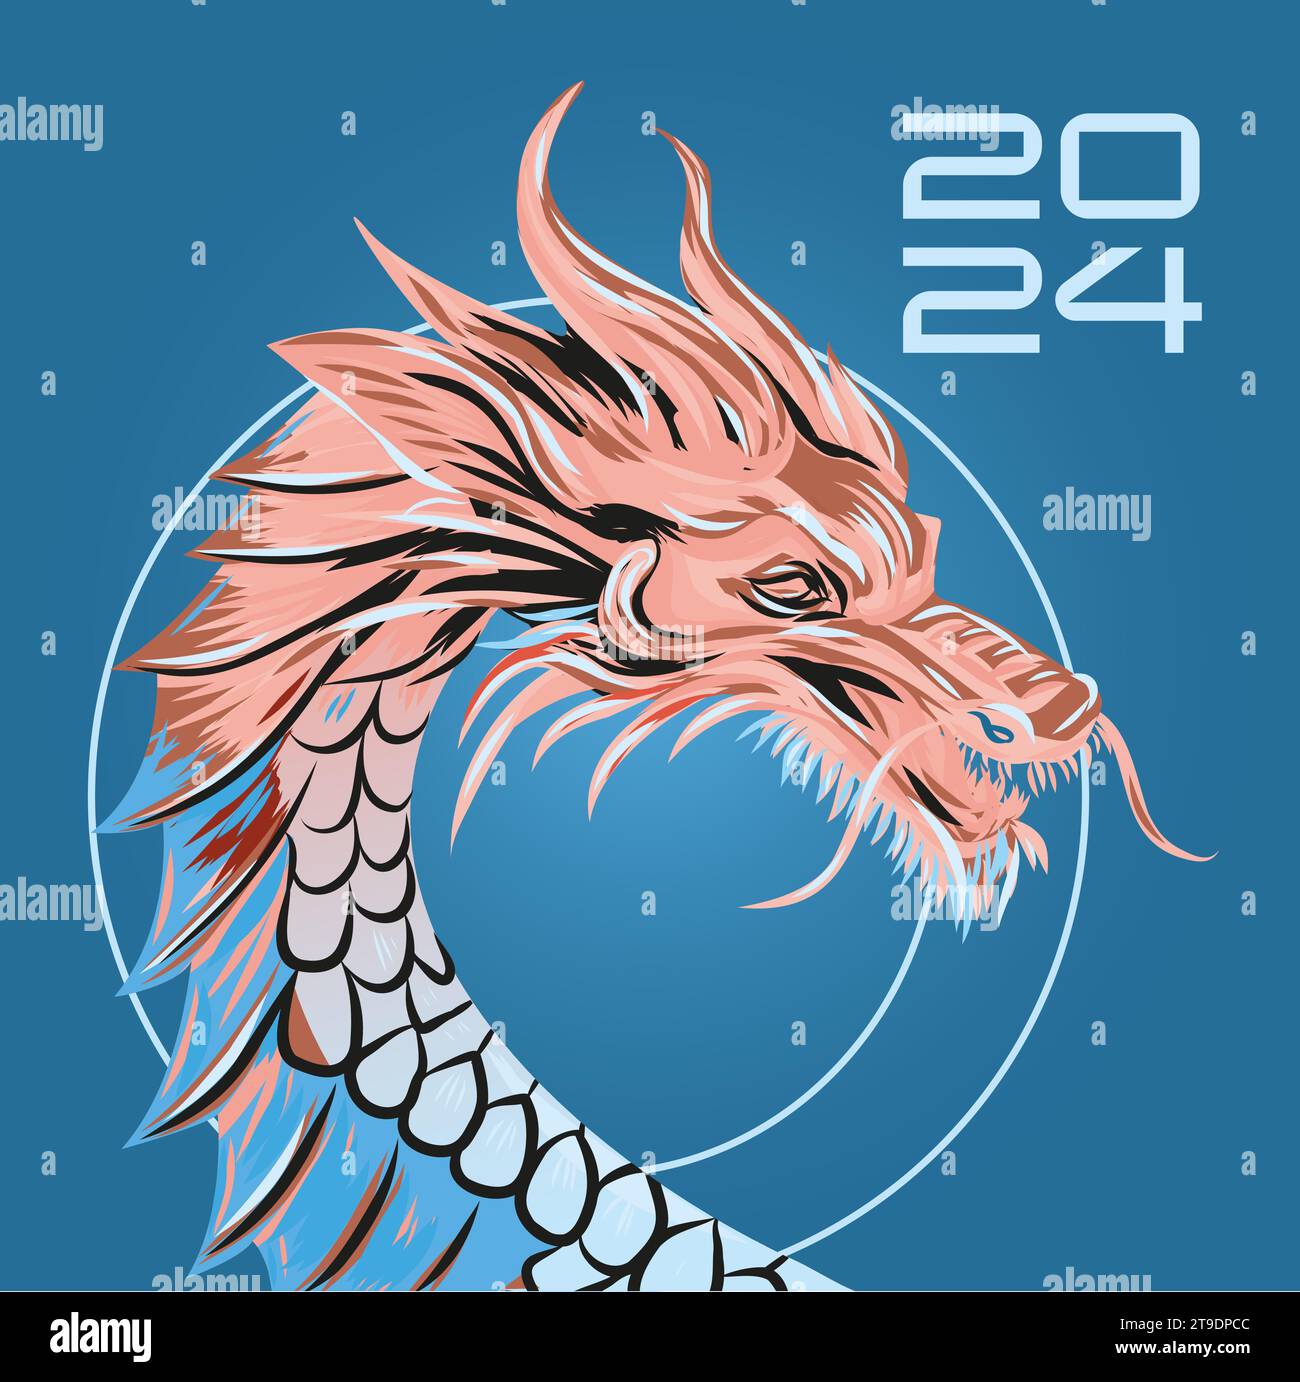 Chinese New Year 2024 Banner - Graphics